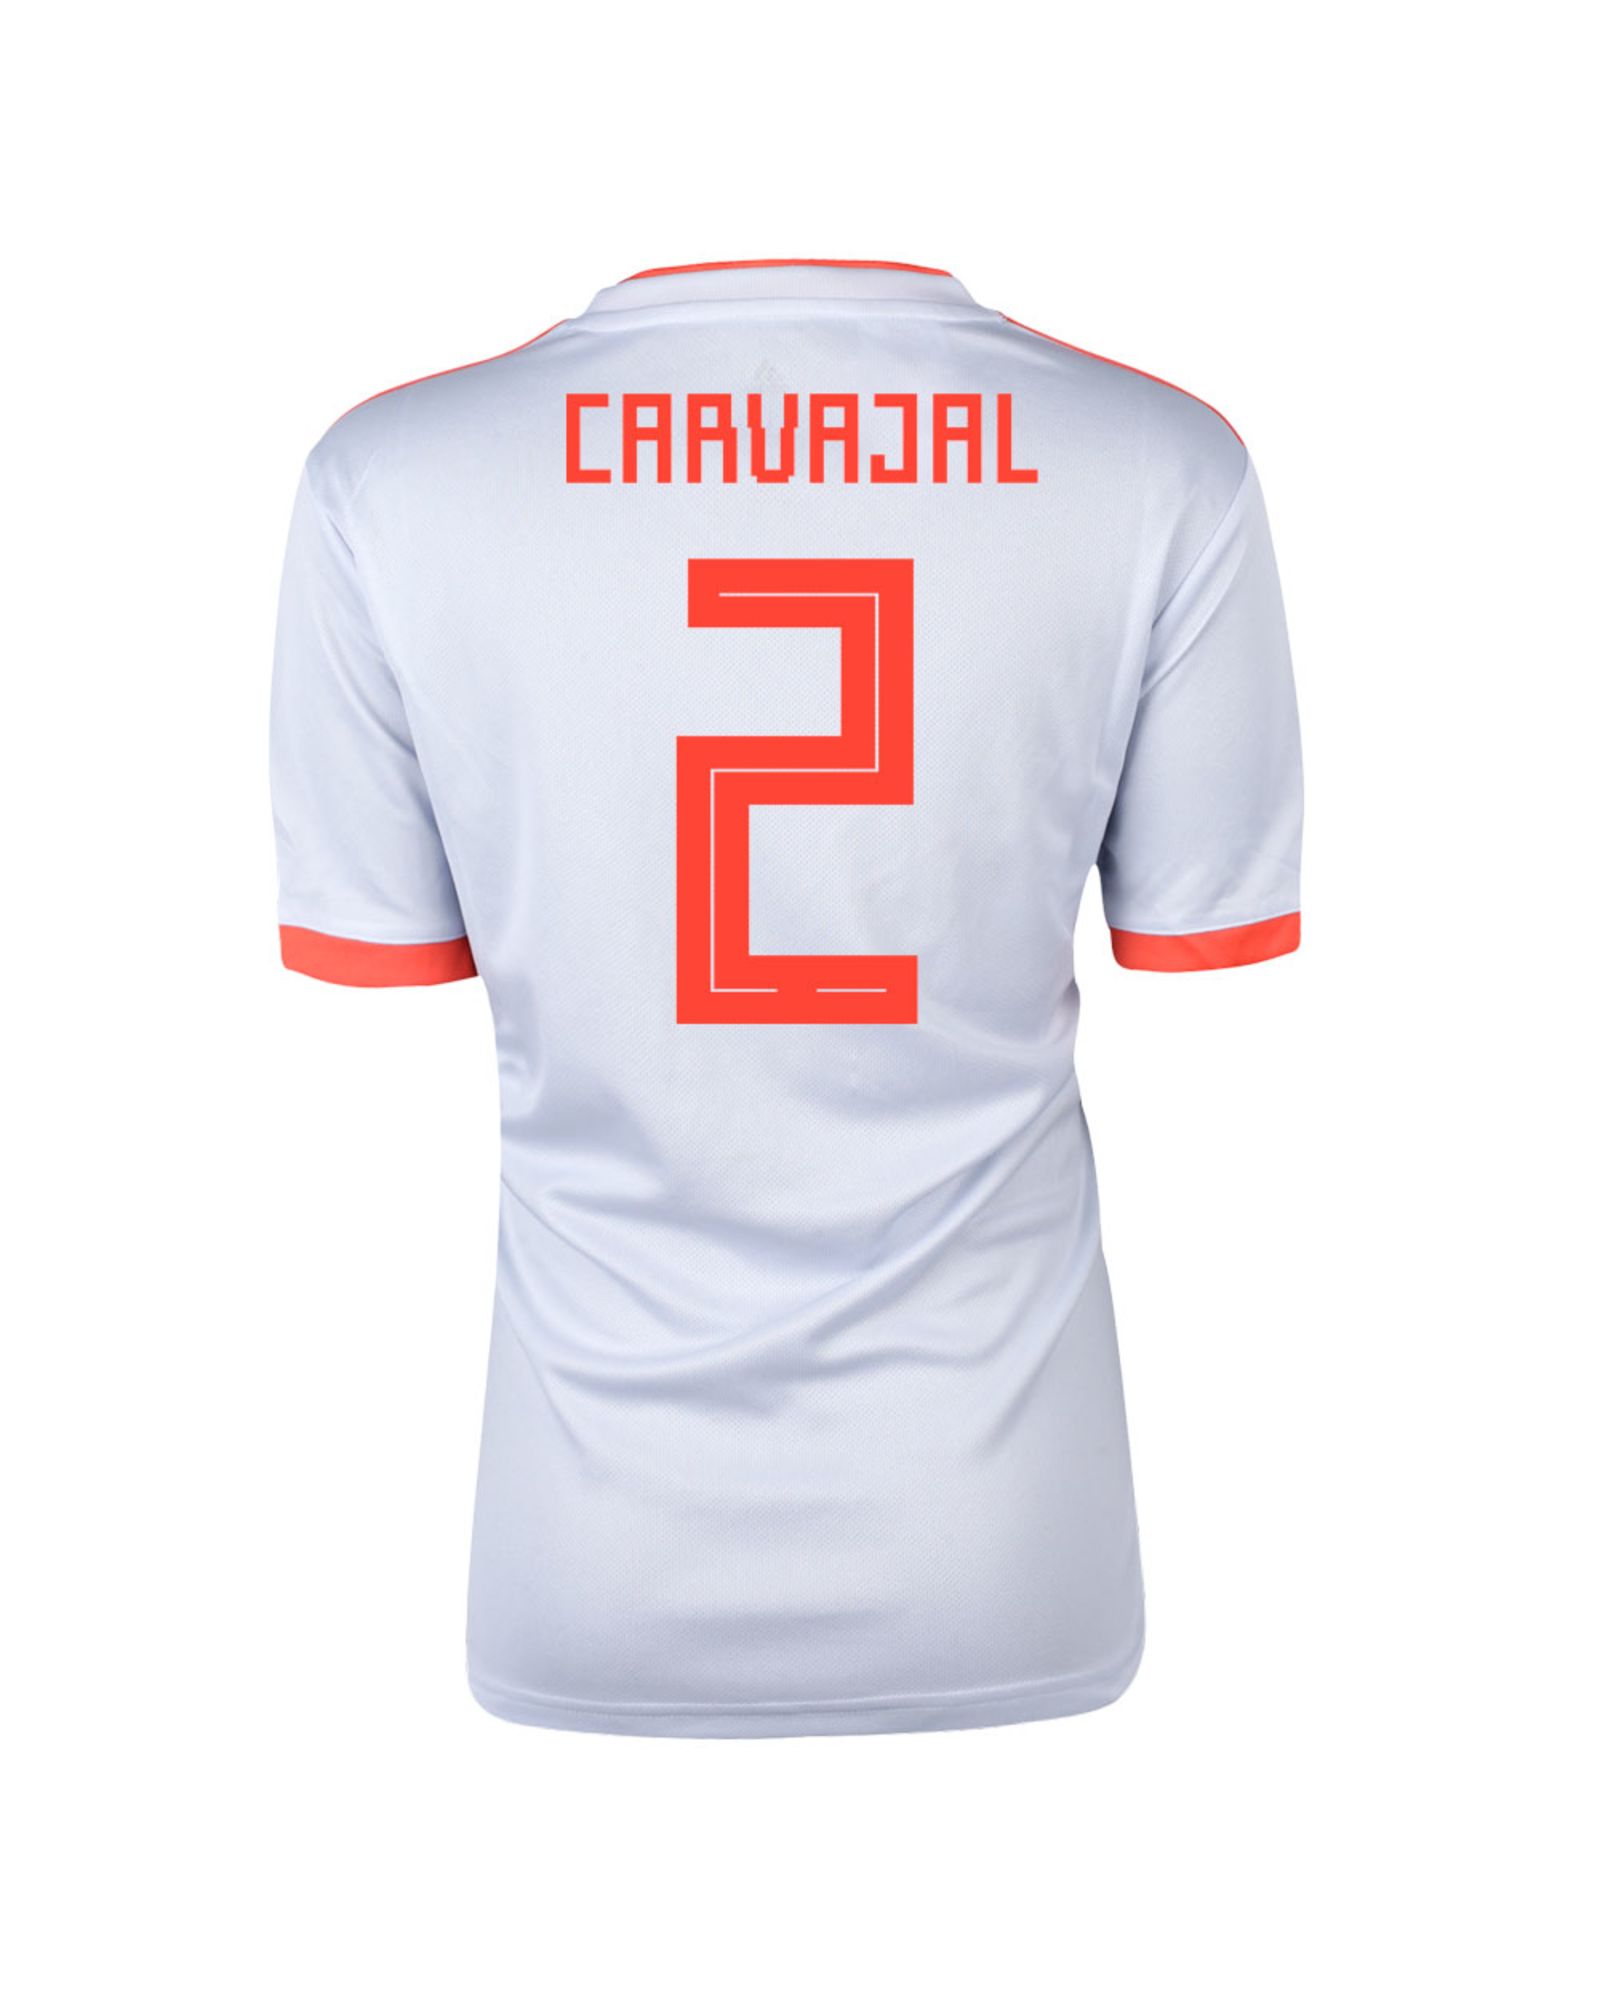 Camiseta 2ª España Mundial 2018 Carvajal Junior Azul - Fútbol Factory